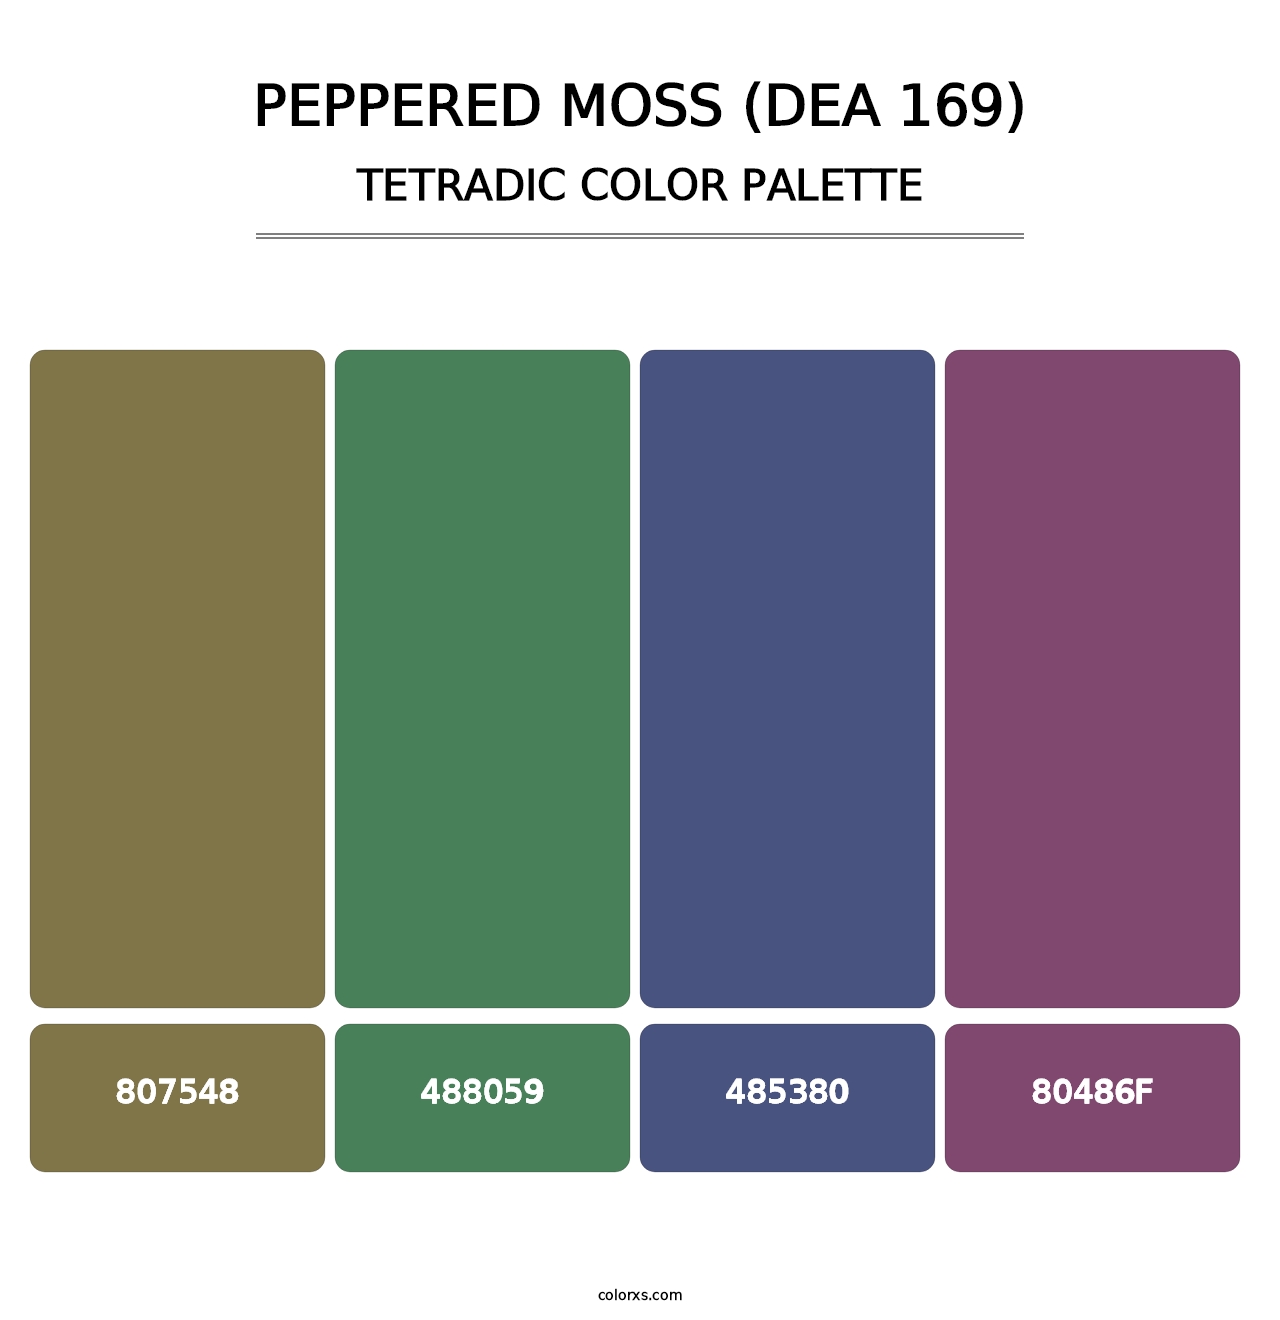 Peppered Moss (DEA 169) - Tetradic Color Palette